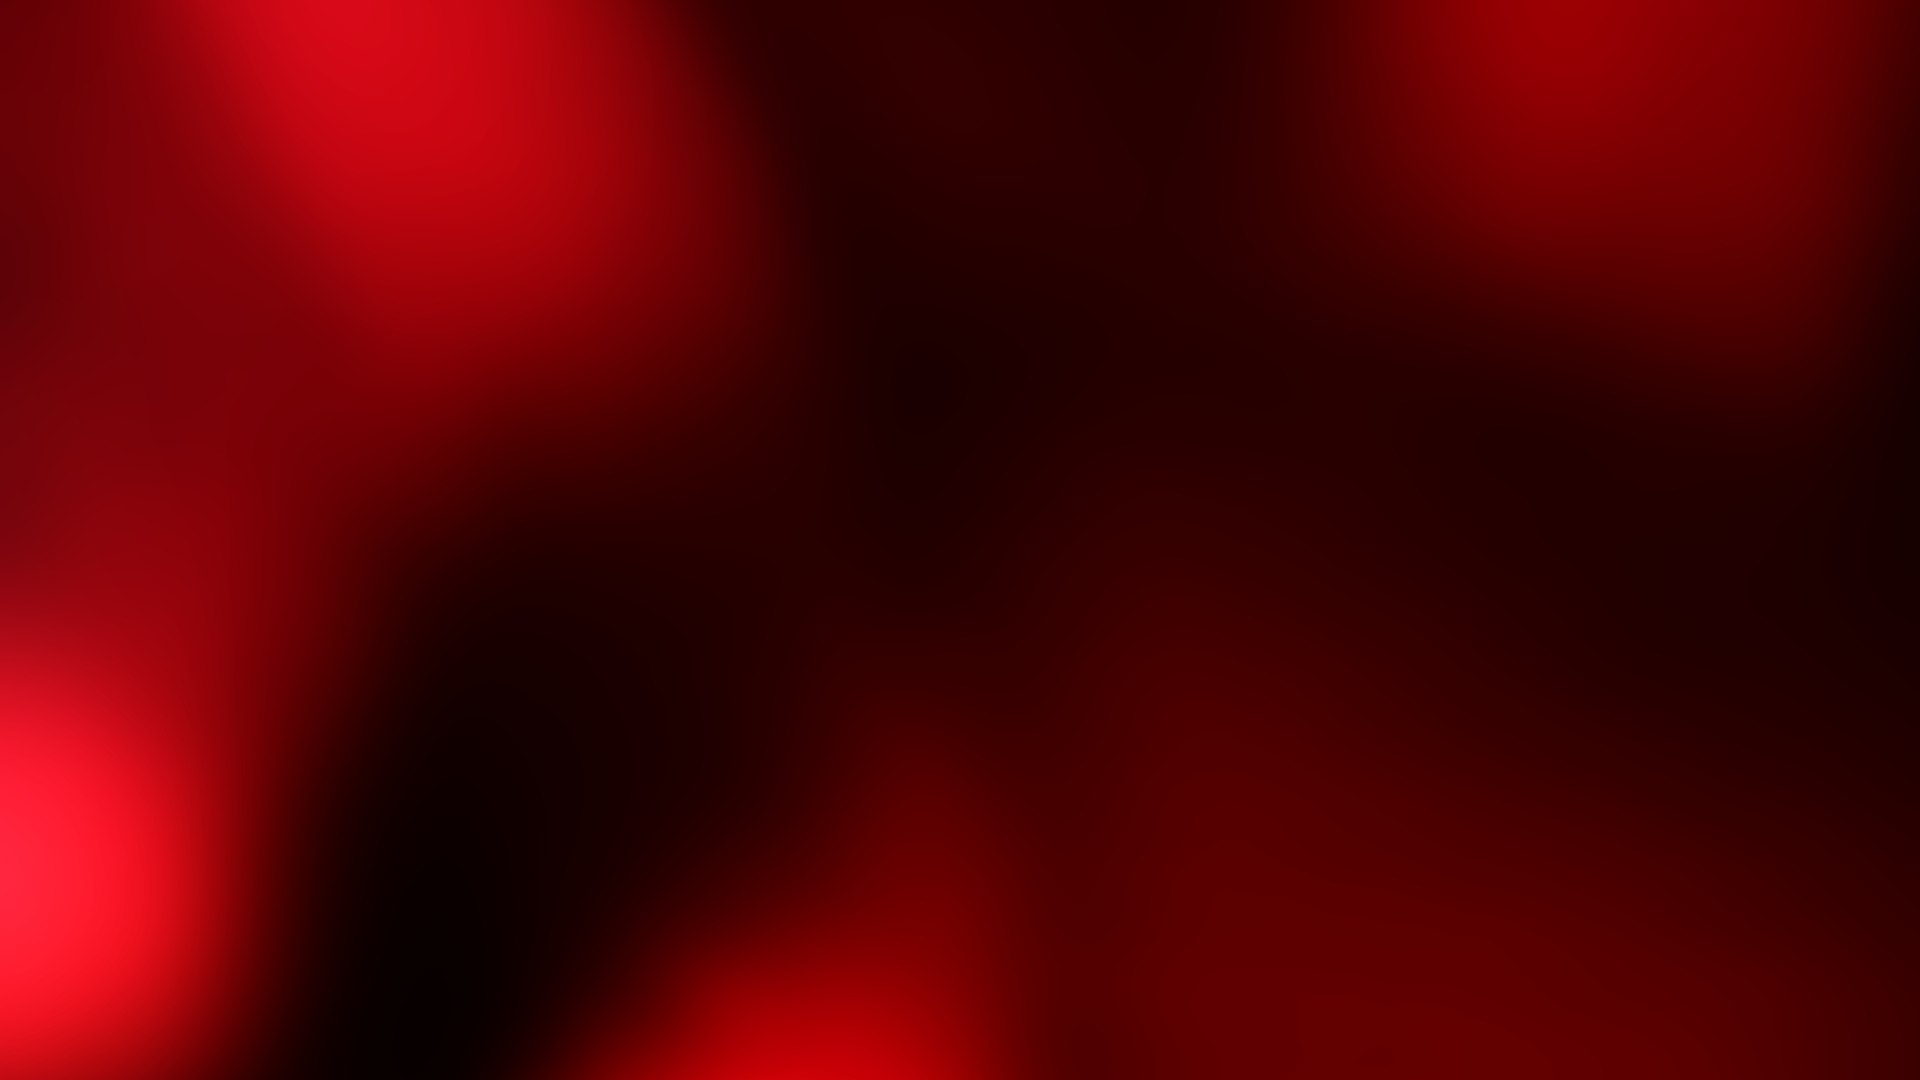 Categories Wallpaper Ment On Red Blurry Desktop